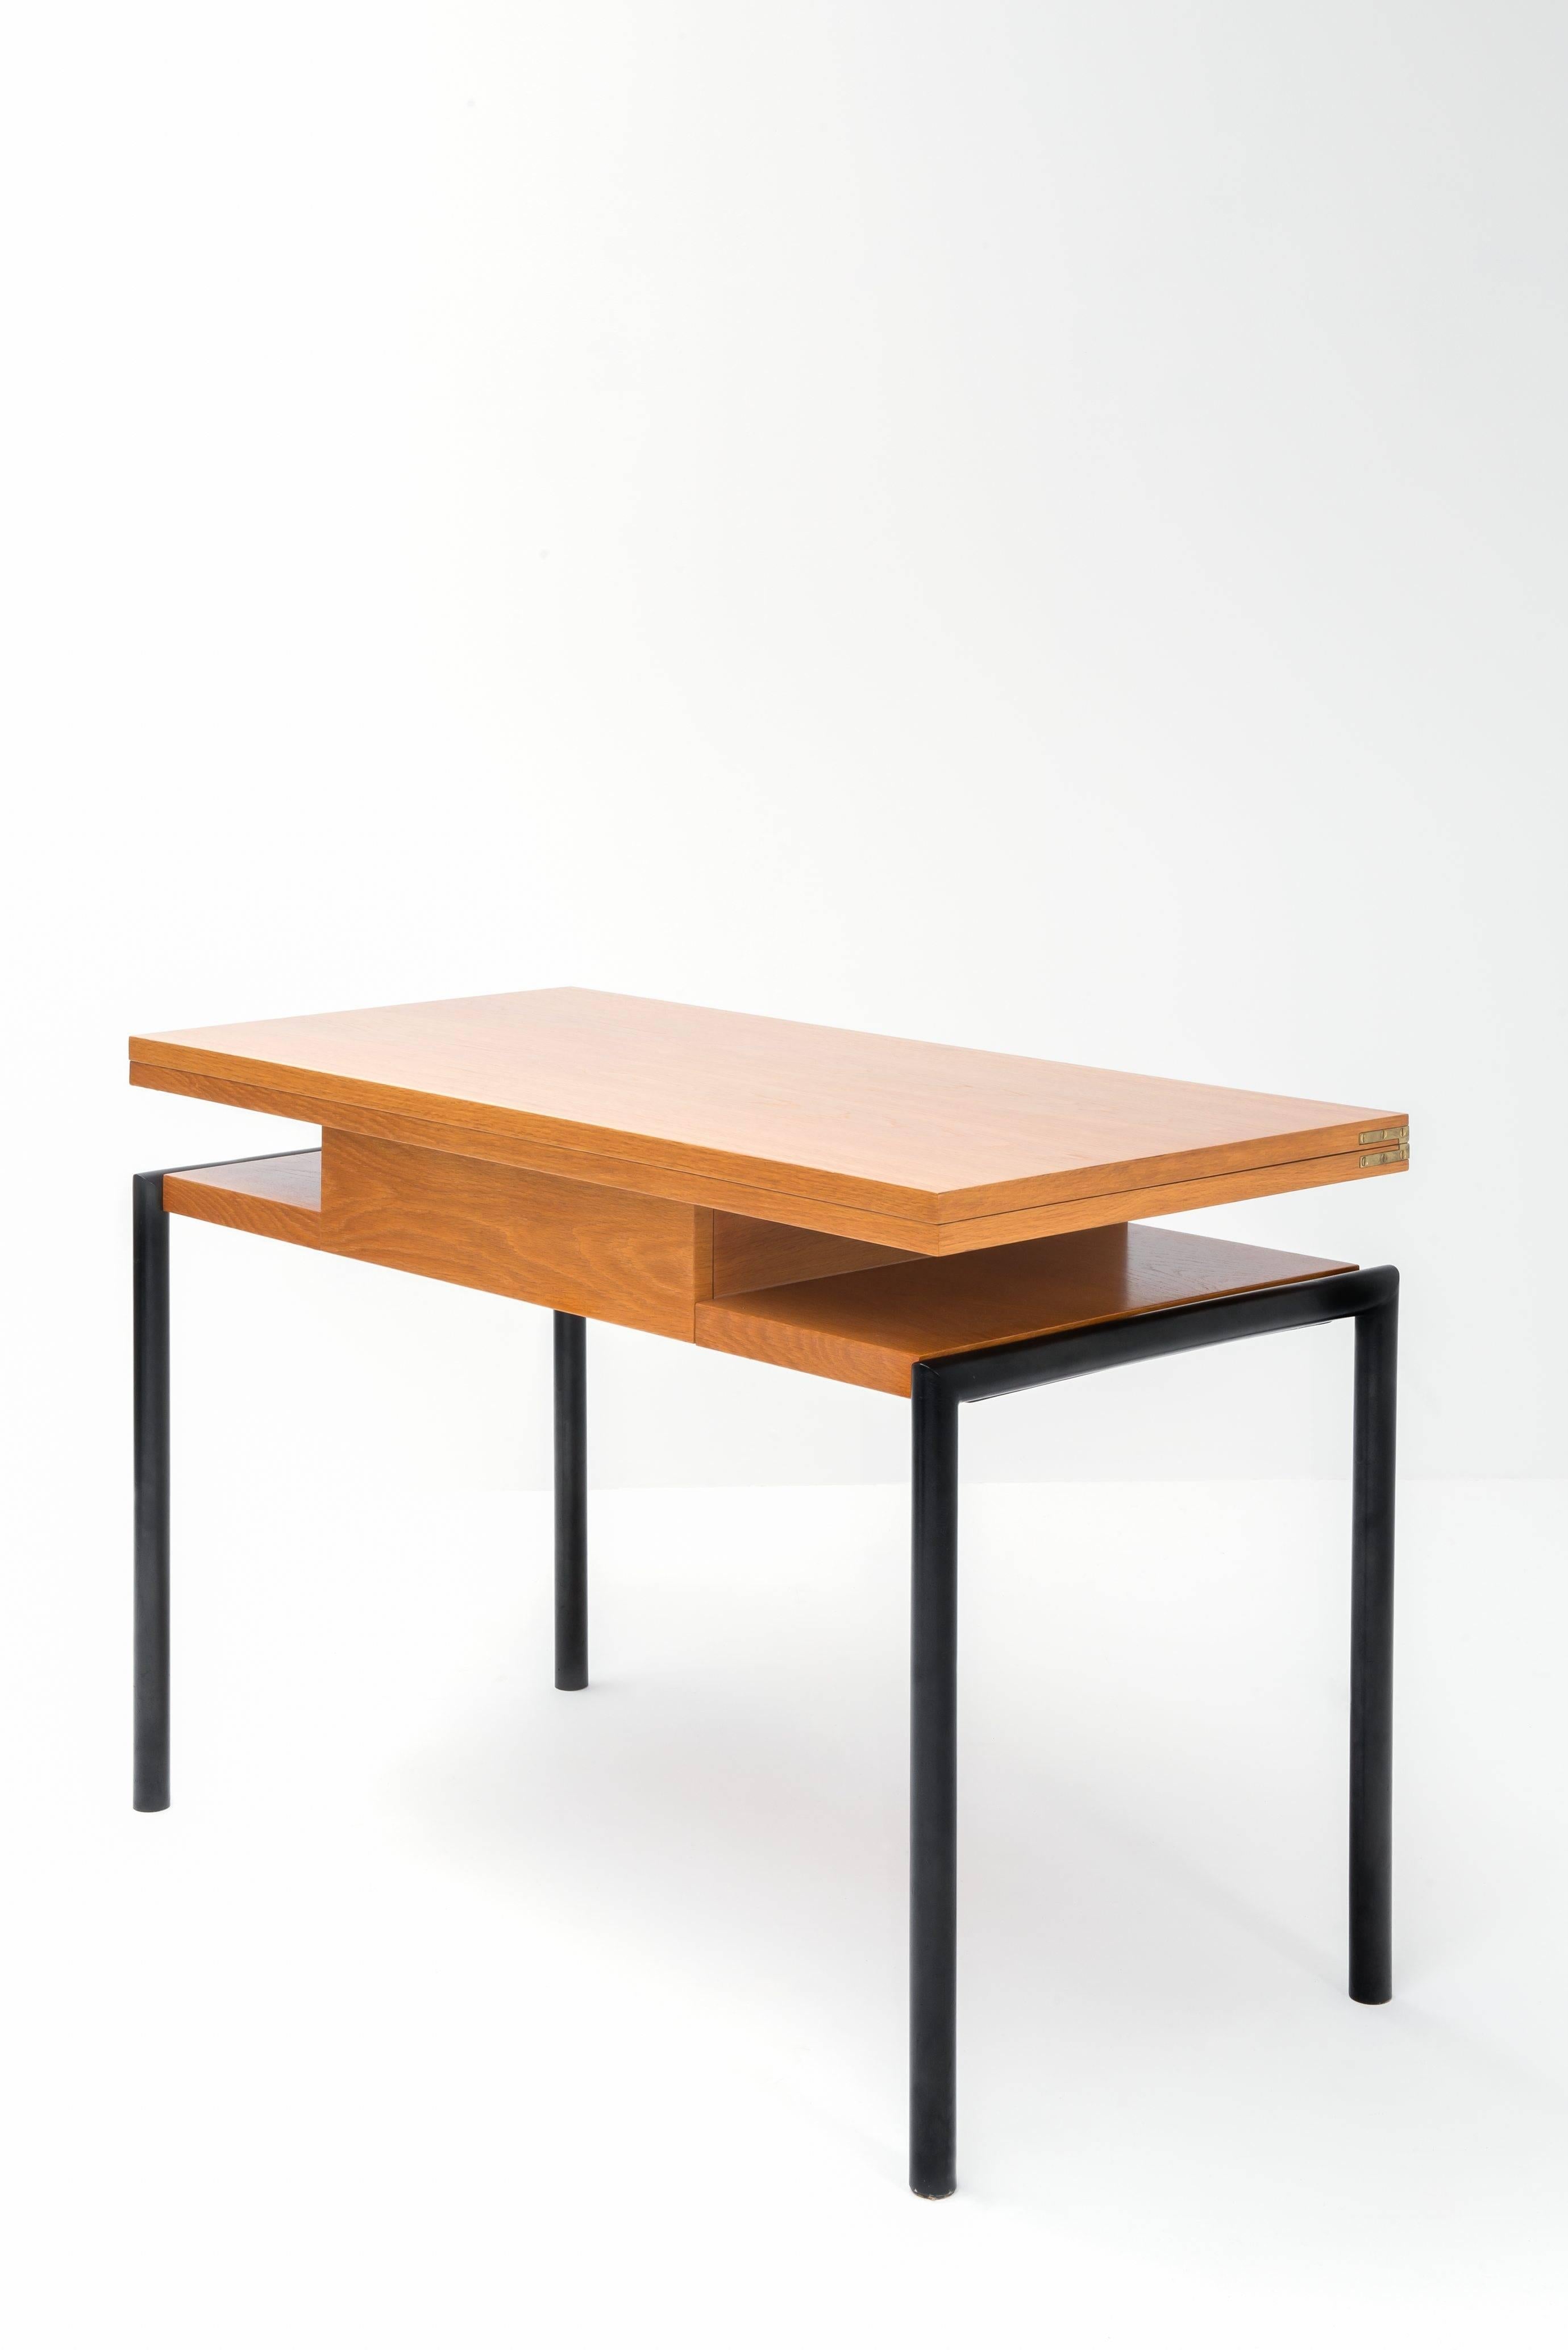 Table-console by Marcel Gascoin (1907-1986)
Marcel Gascoin edition - 1937